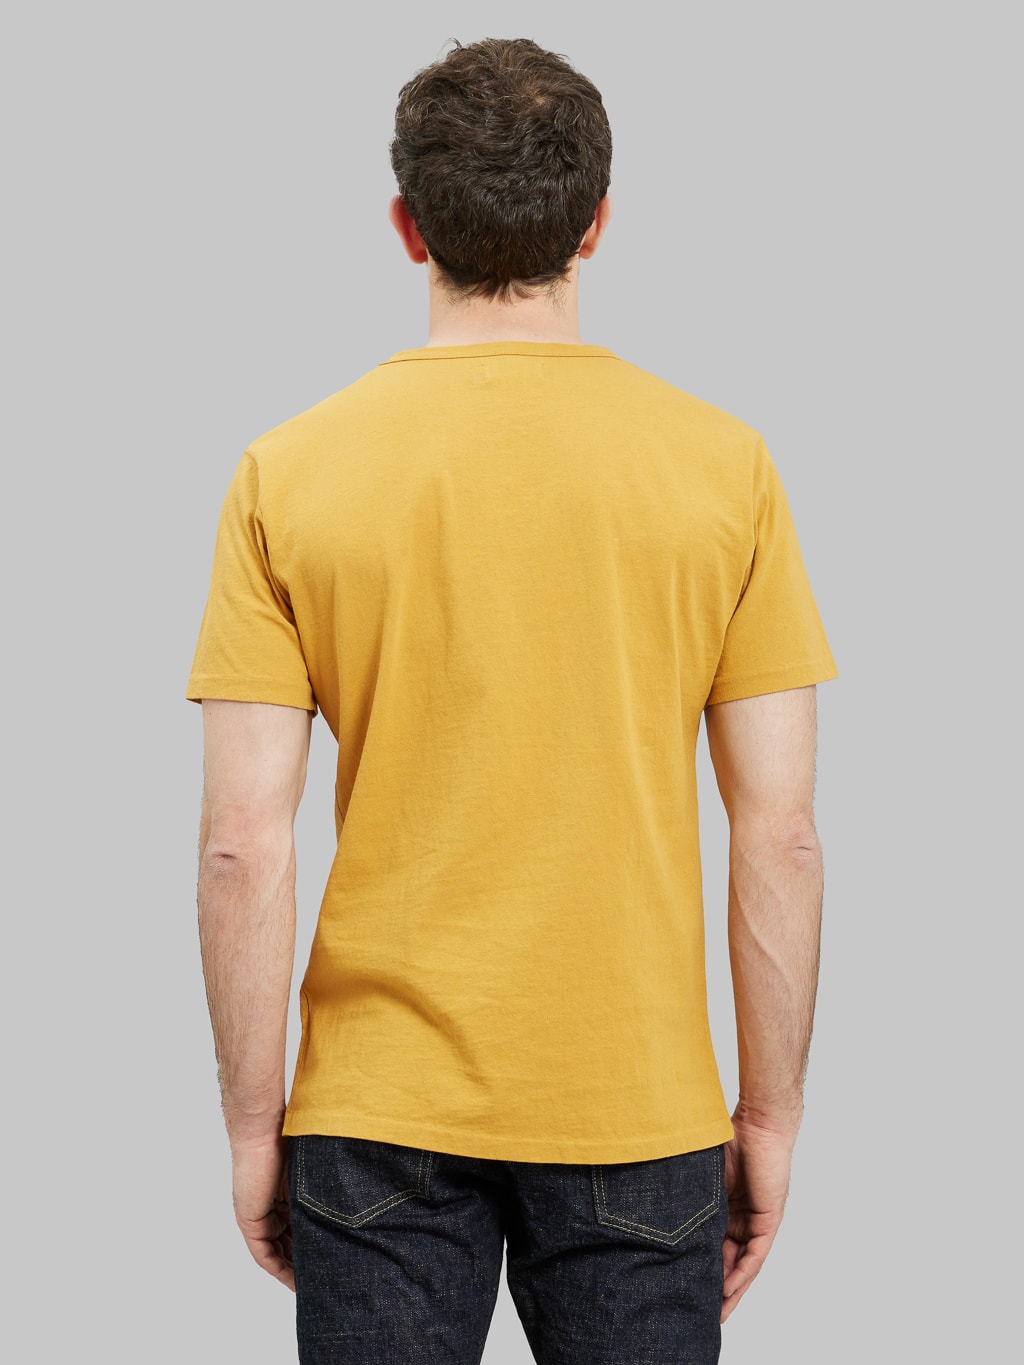 freenote cloth 9 ounce pocket t shirt mustard heavyweight model back fit